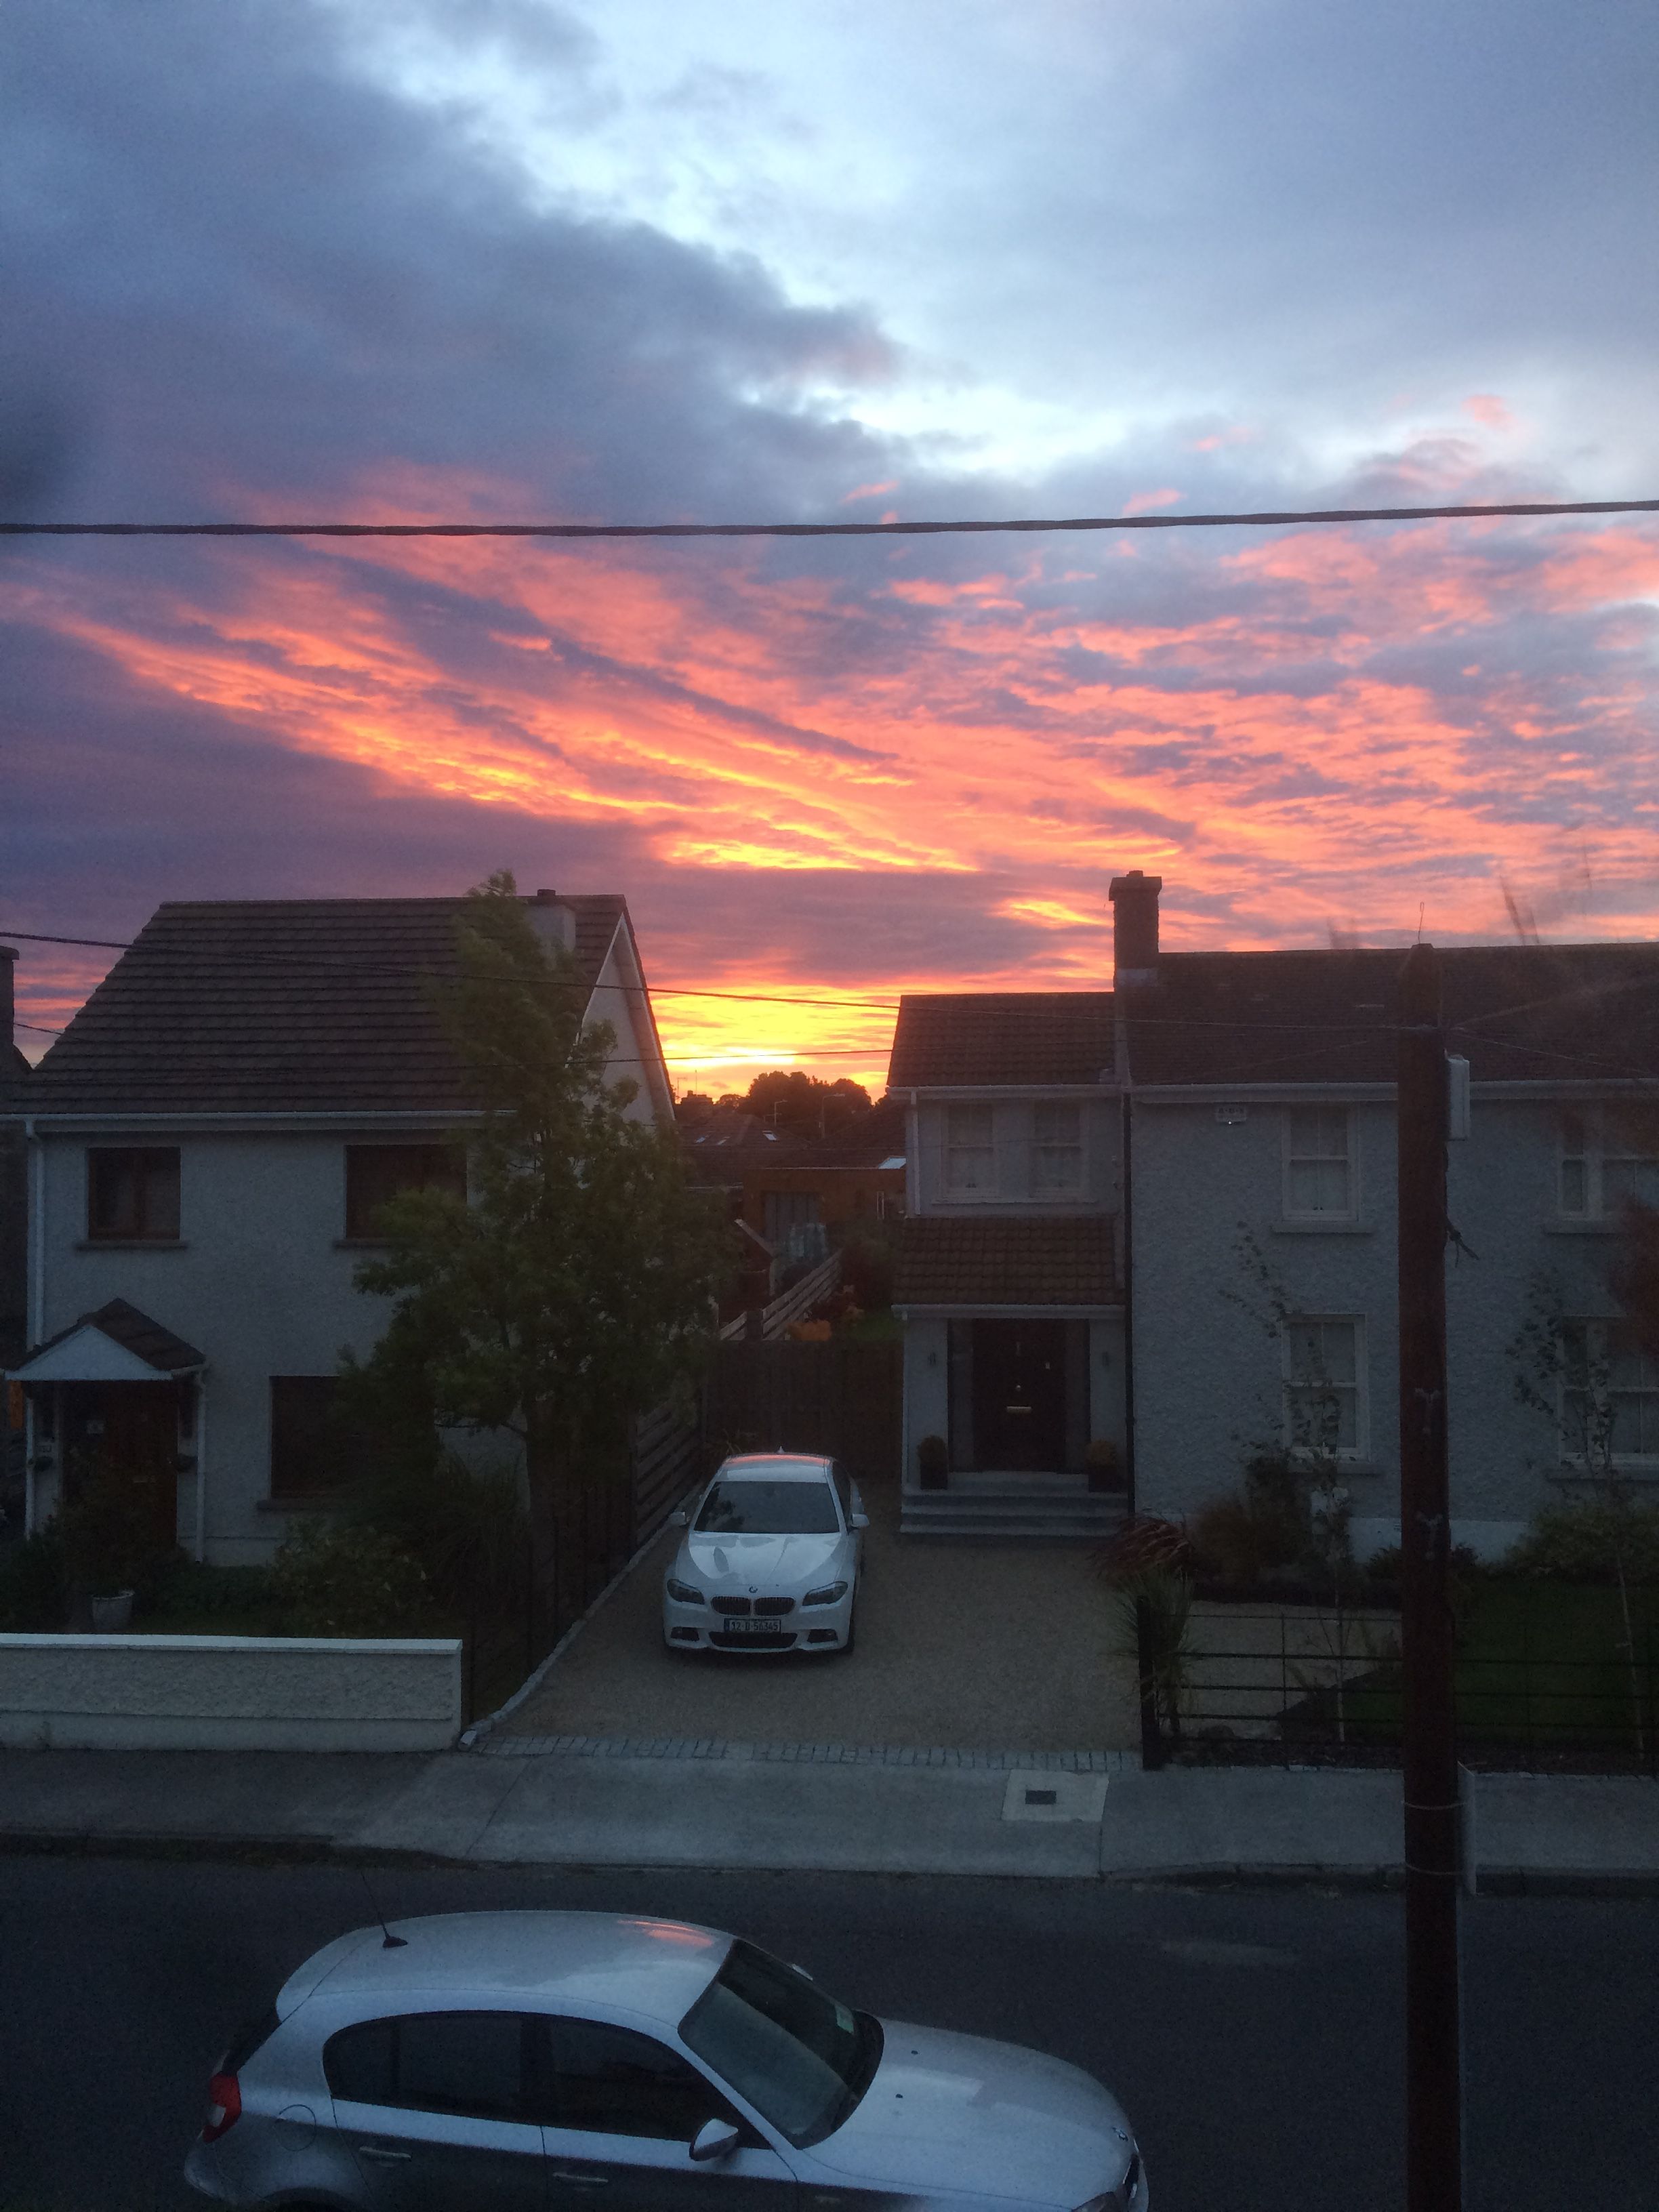 Red Sky in the morning, Shepherds's Warning